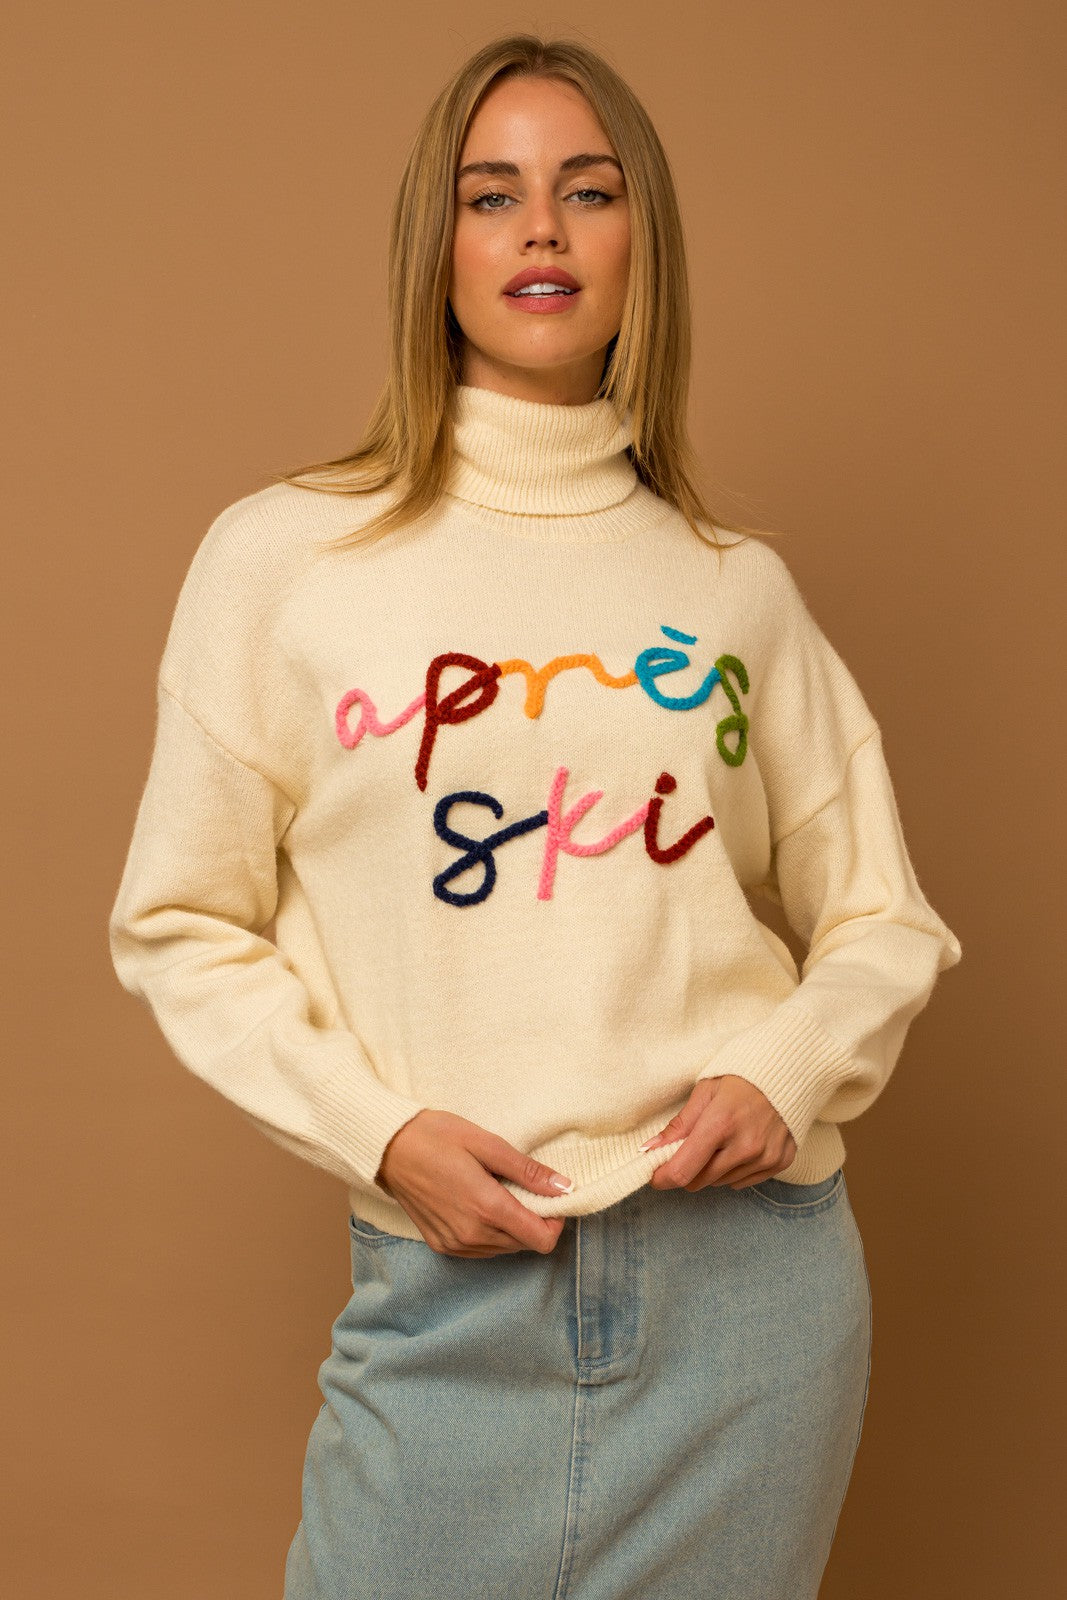 zSALE Apres Ski 3D Letter Long Sleeve Turtleneck Sweater - Ivory Multi